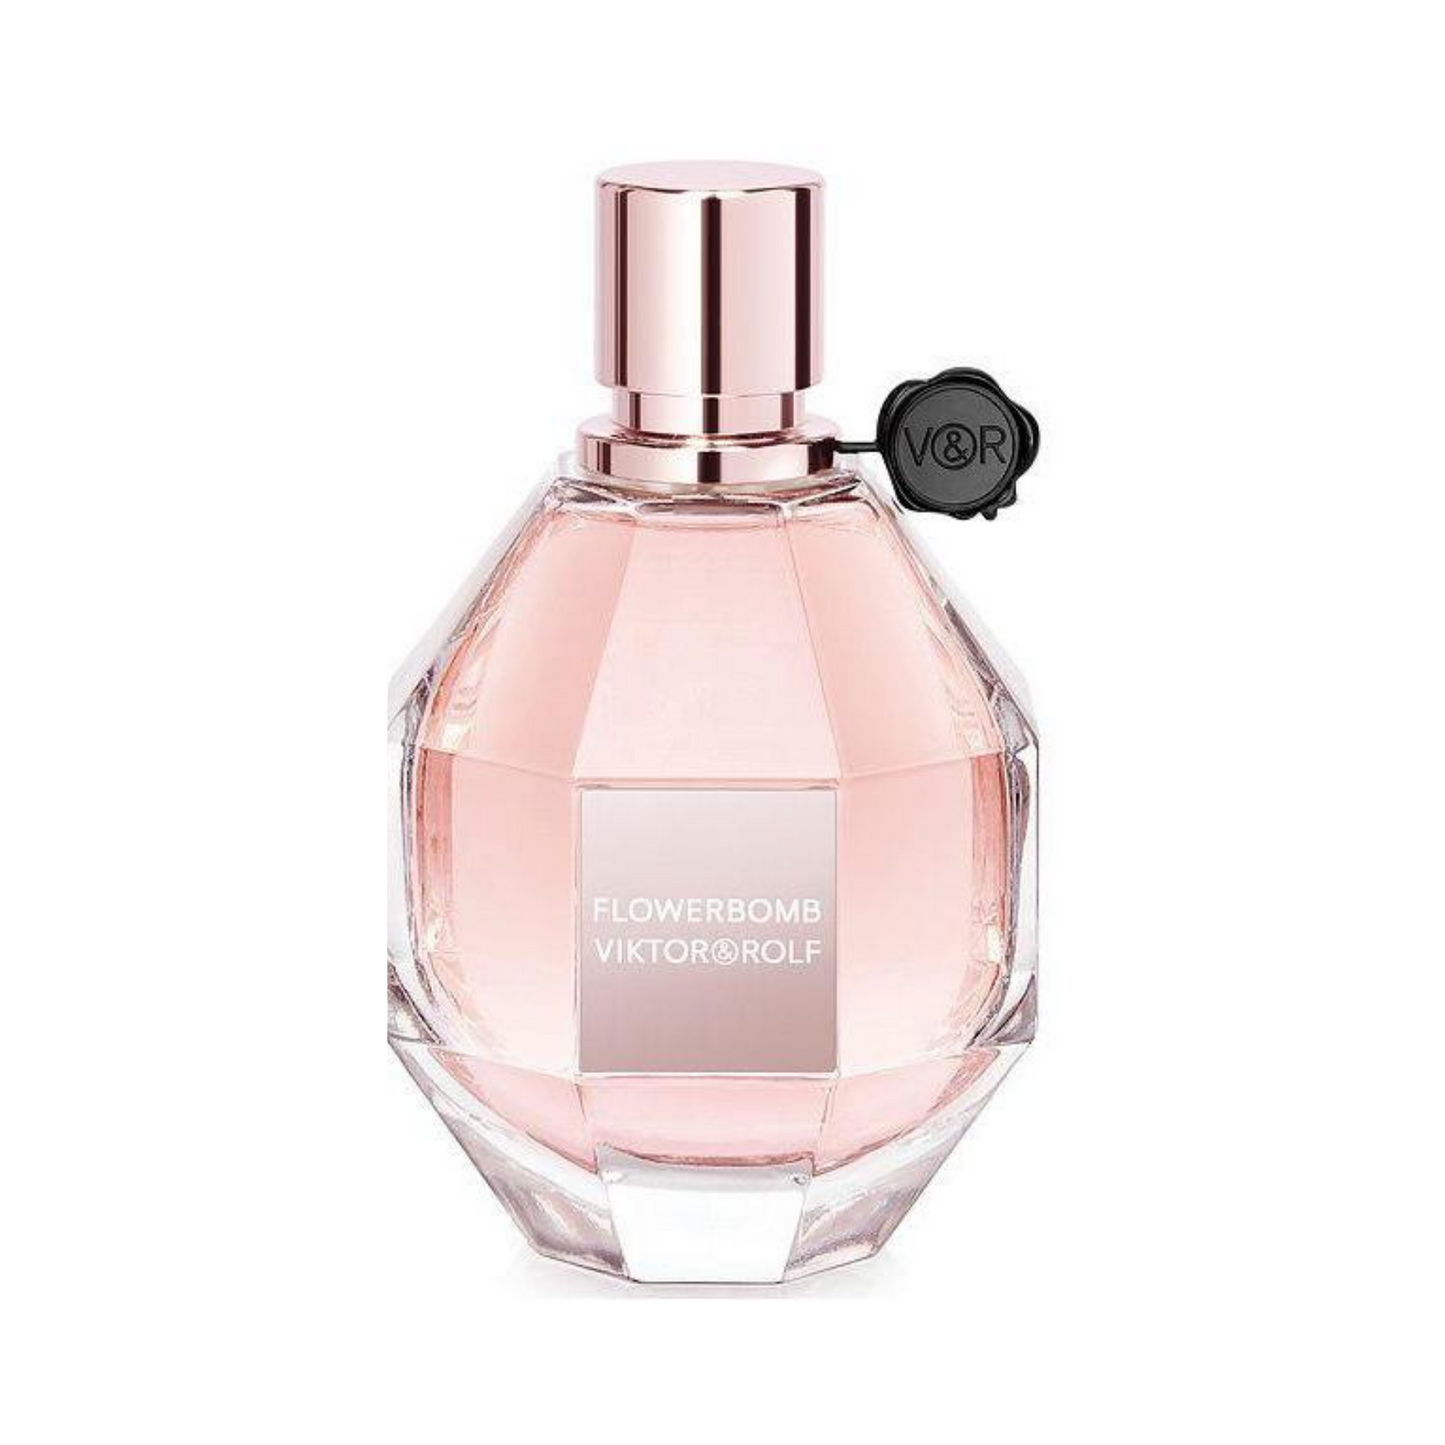 Flowerbomb by Viktor & Rolf type Perfume for Women